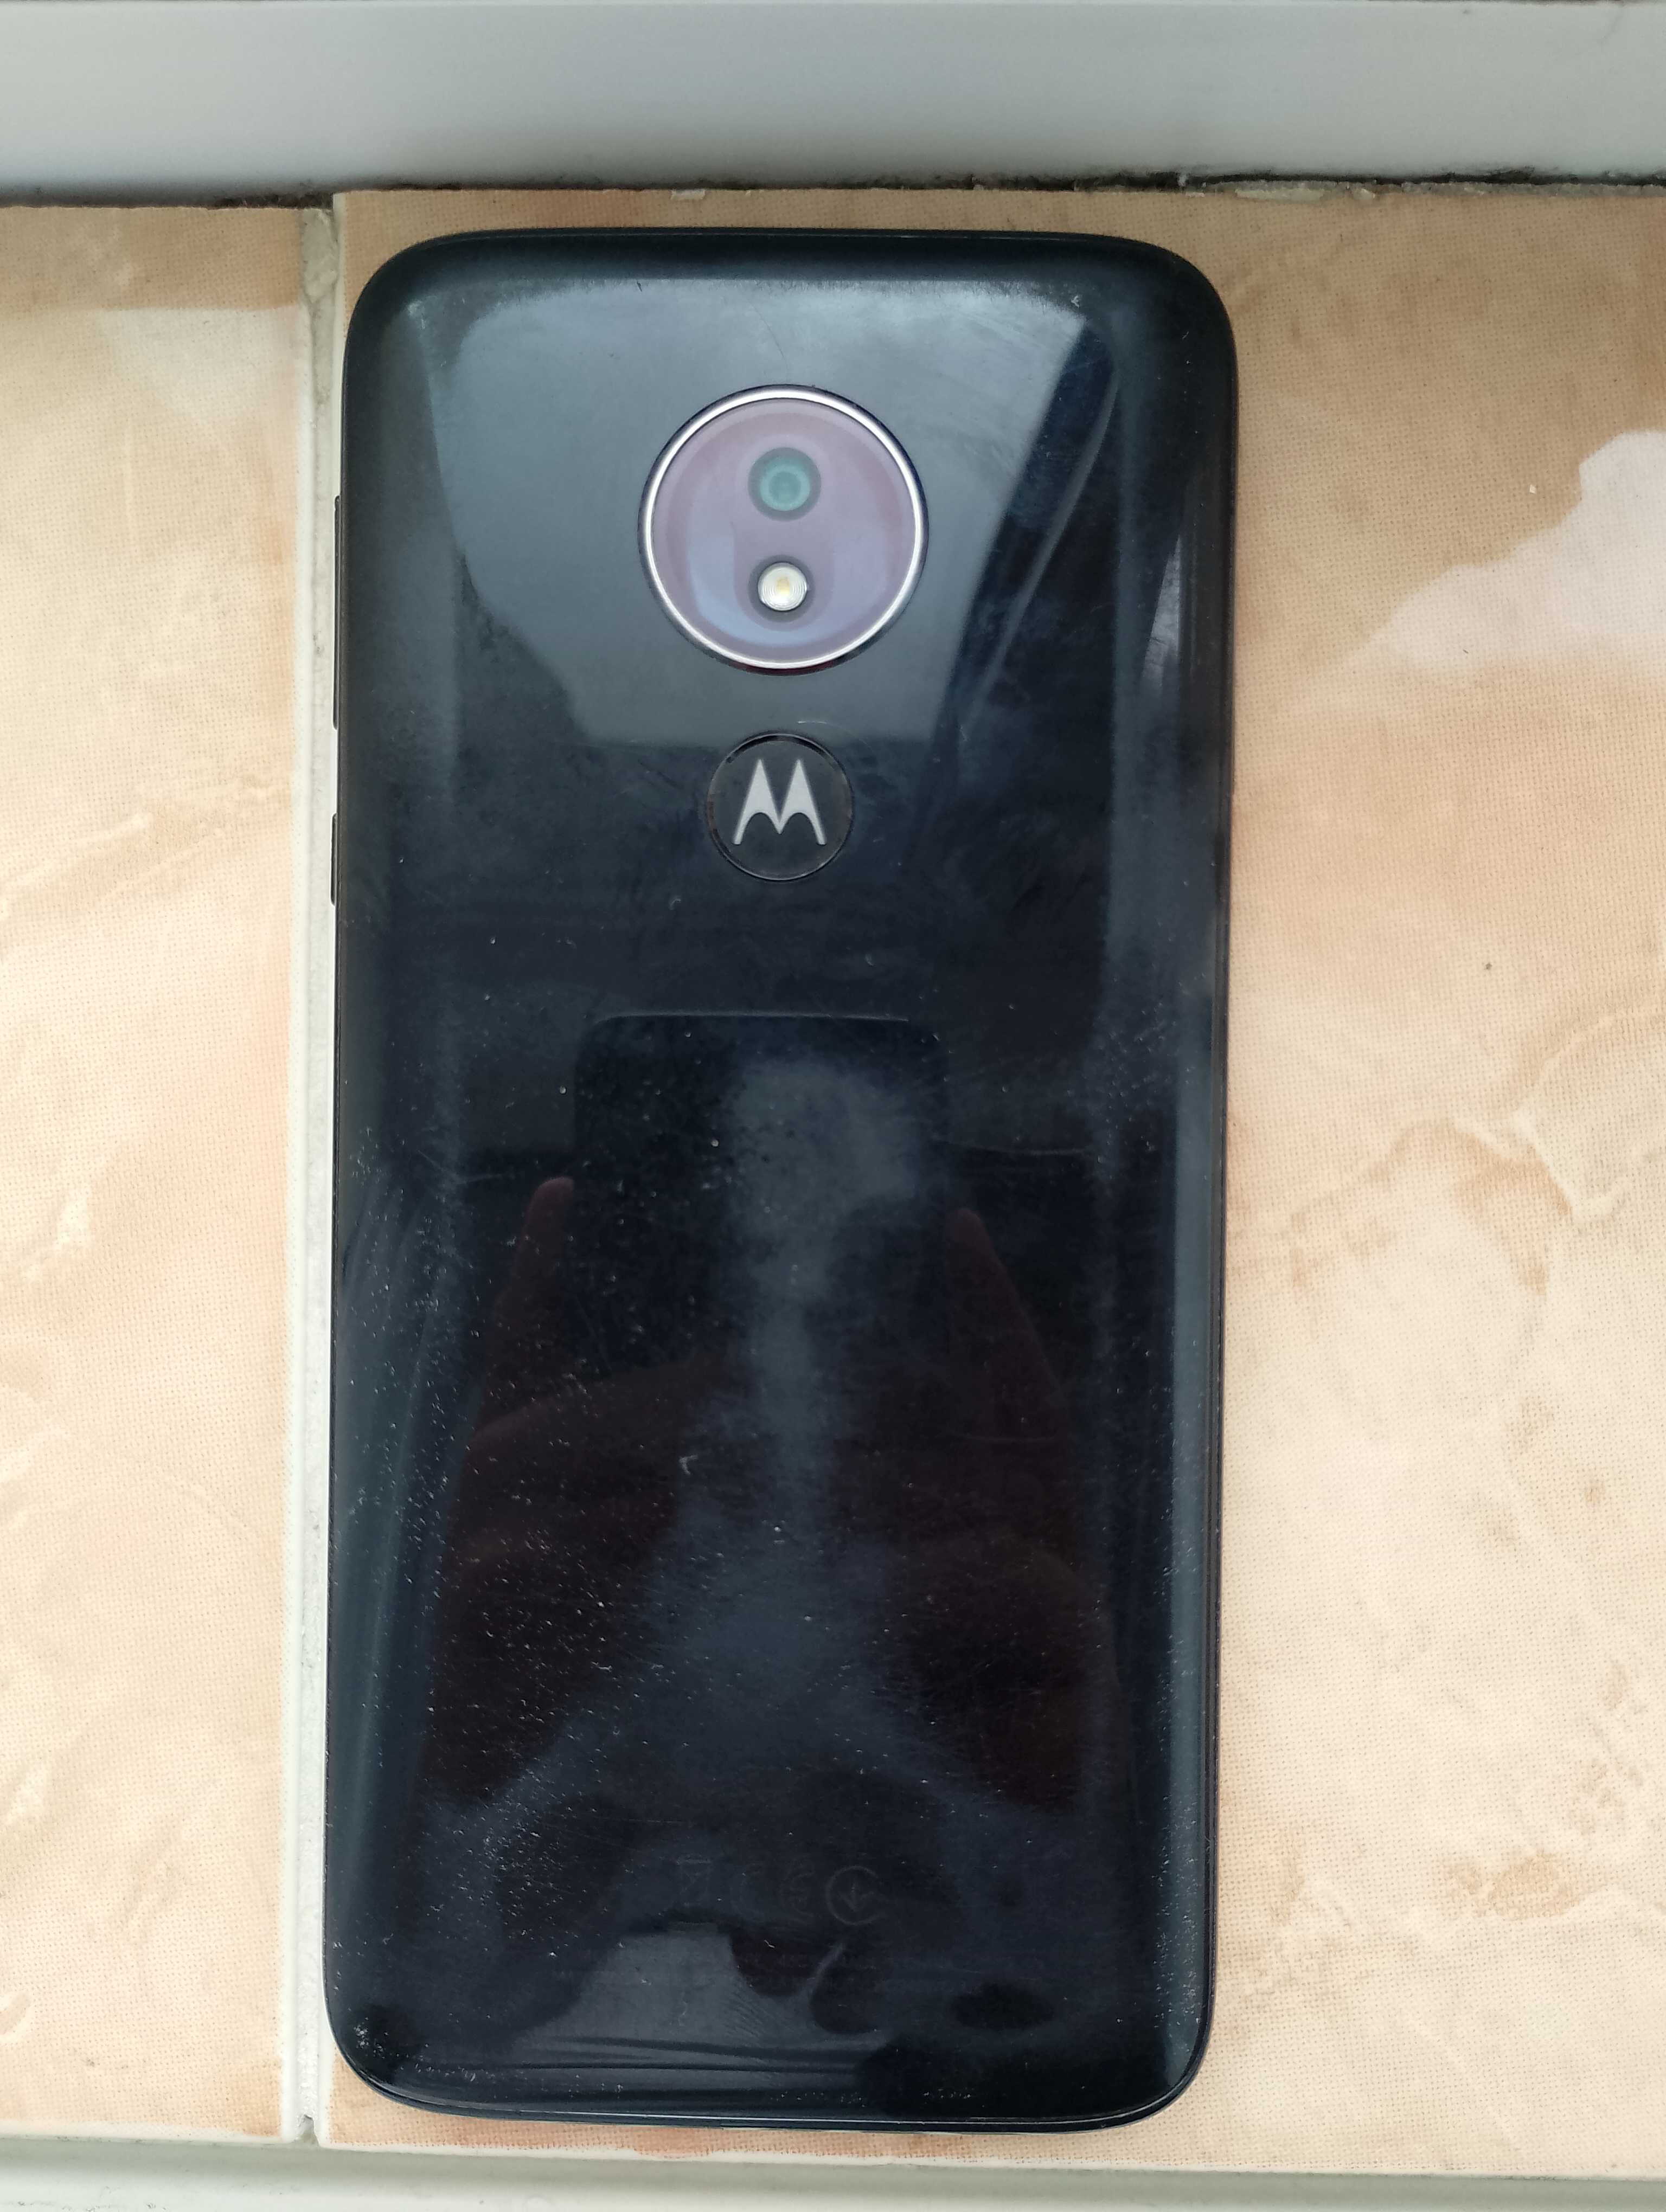 Motorola G7 Power